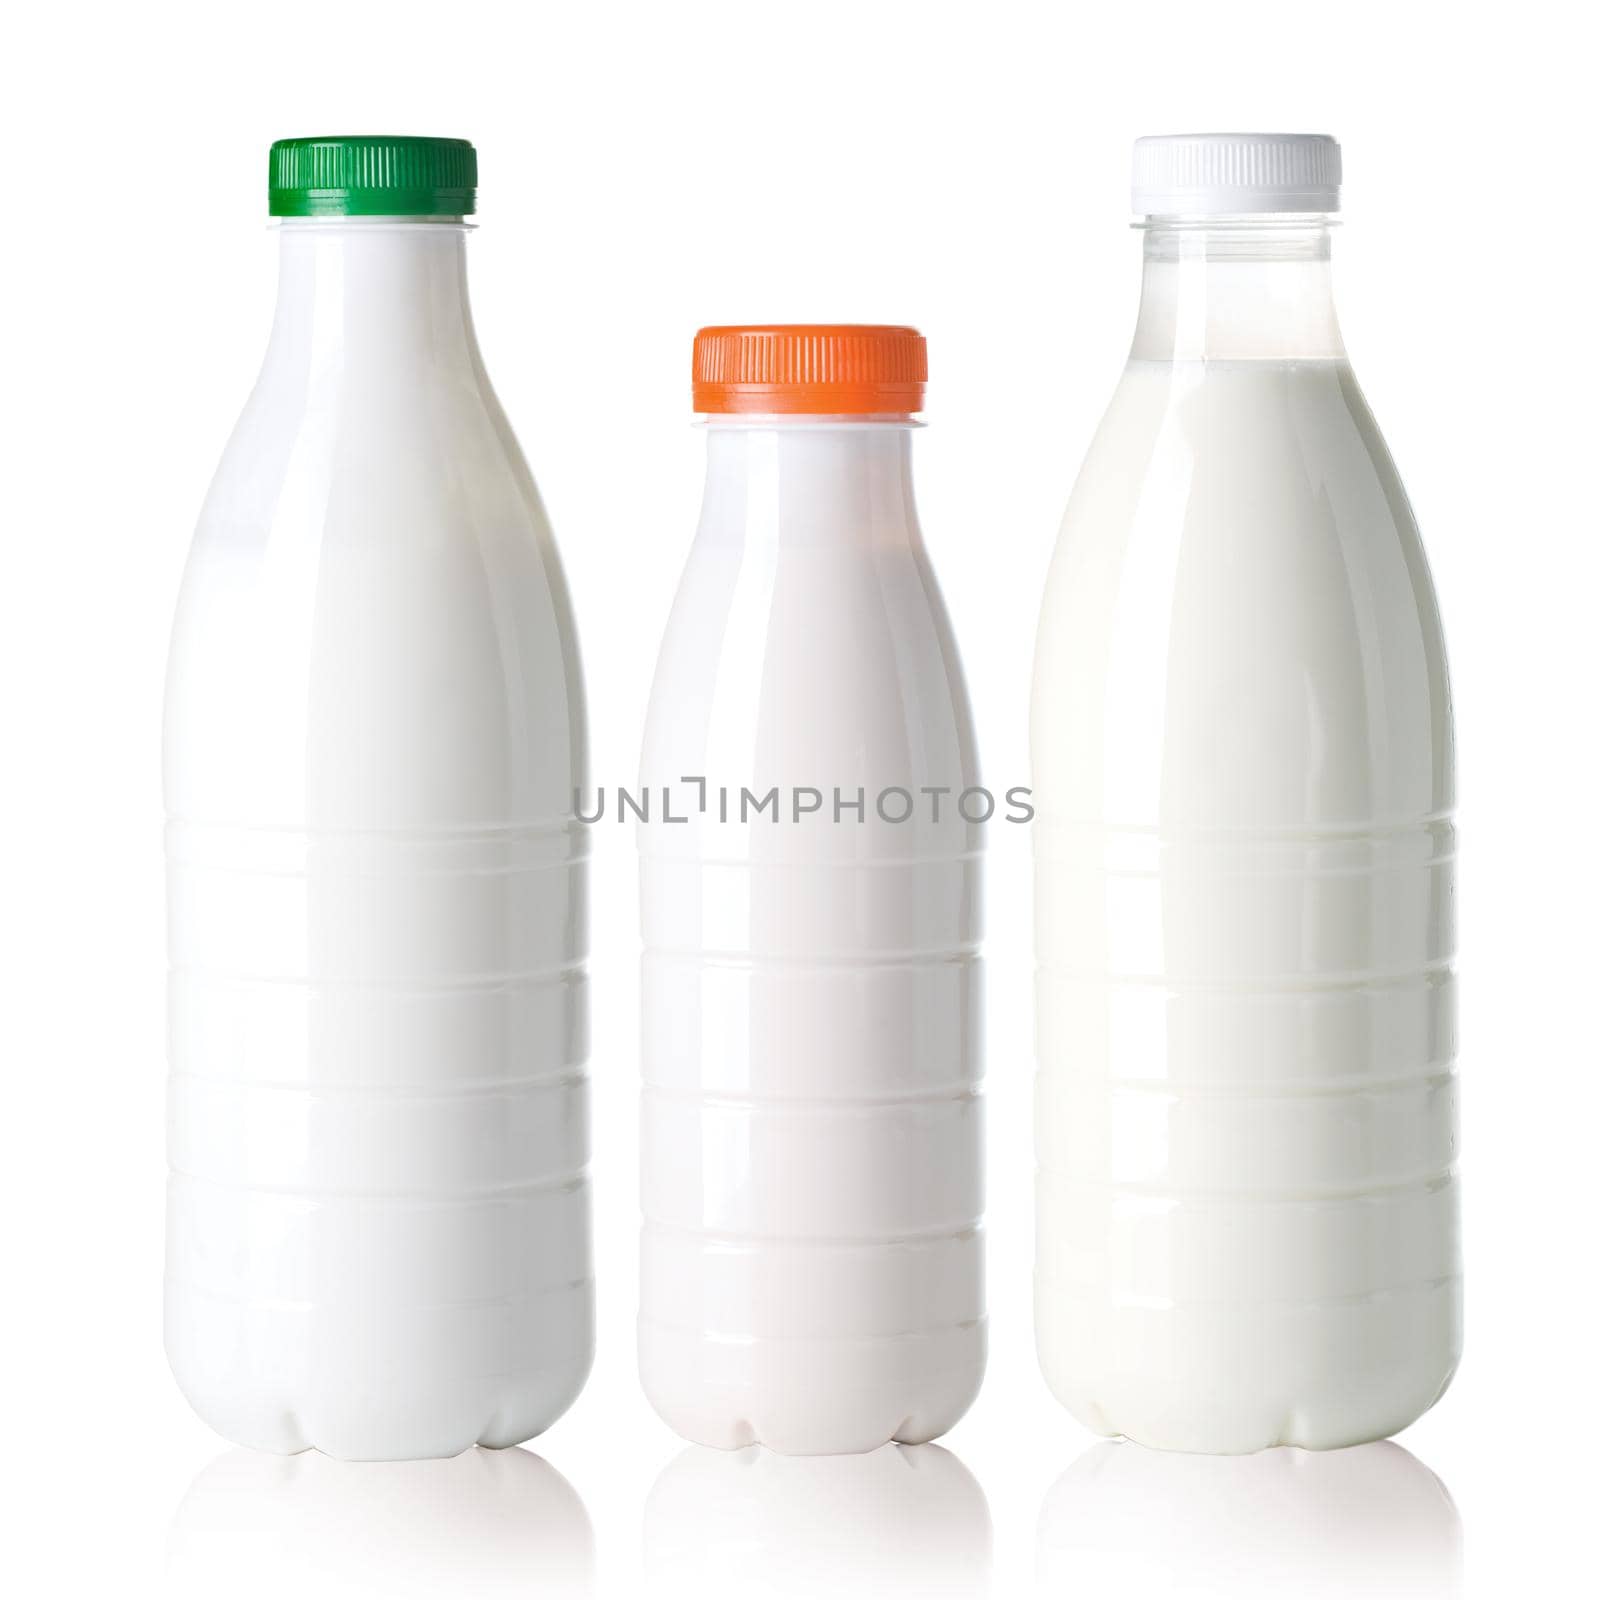  milk bottle by kornienko